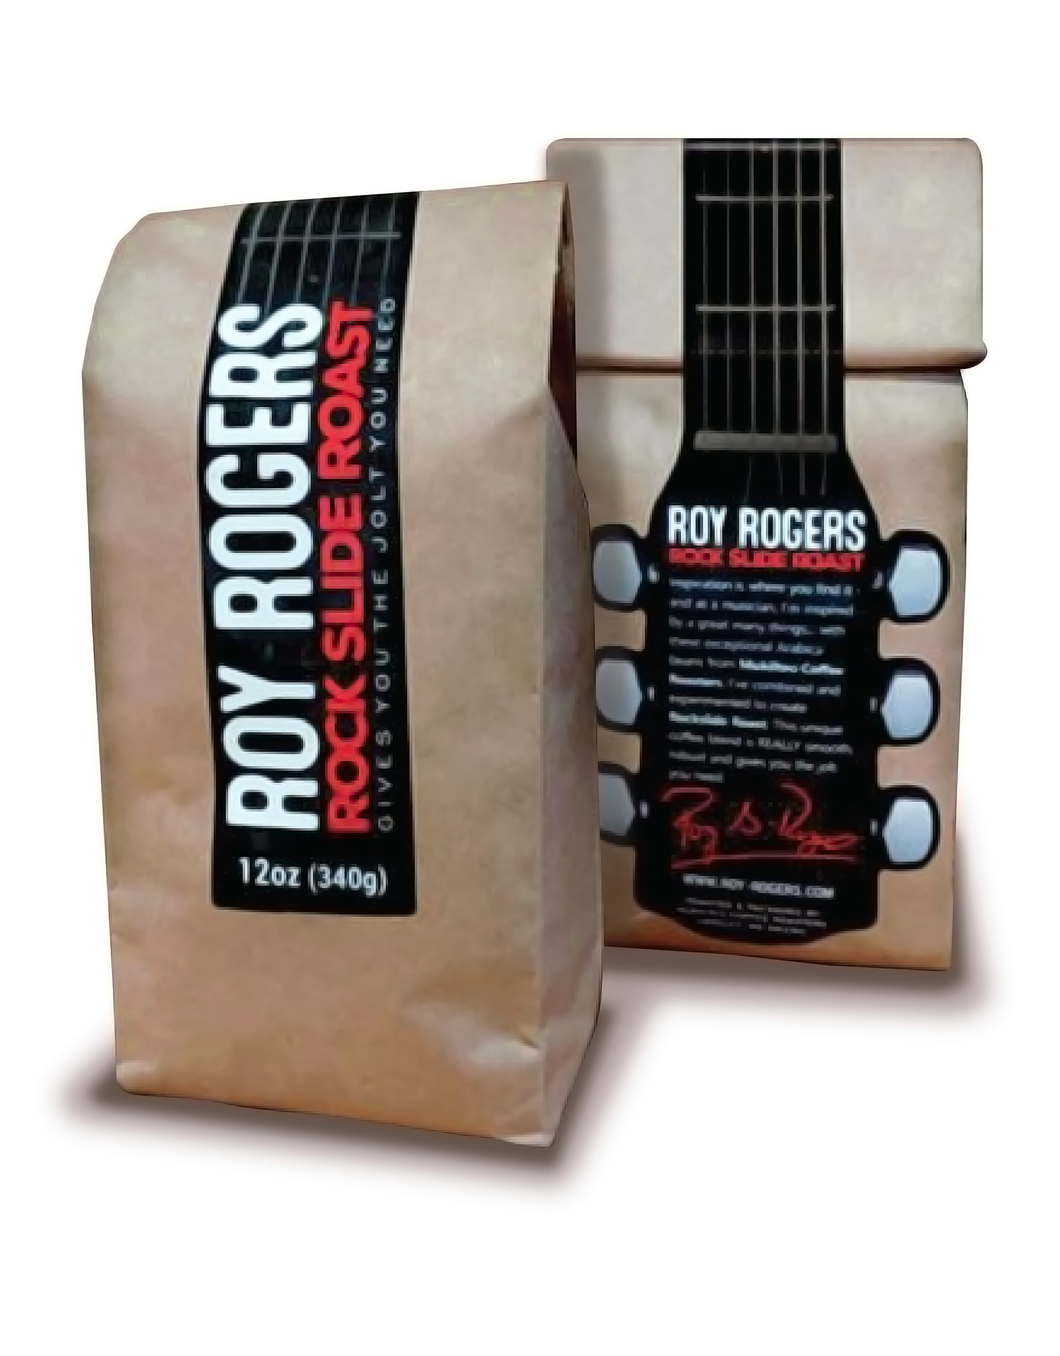 Roy Rogers - Rock Slide Roast Coffee